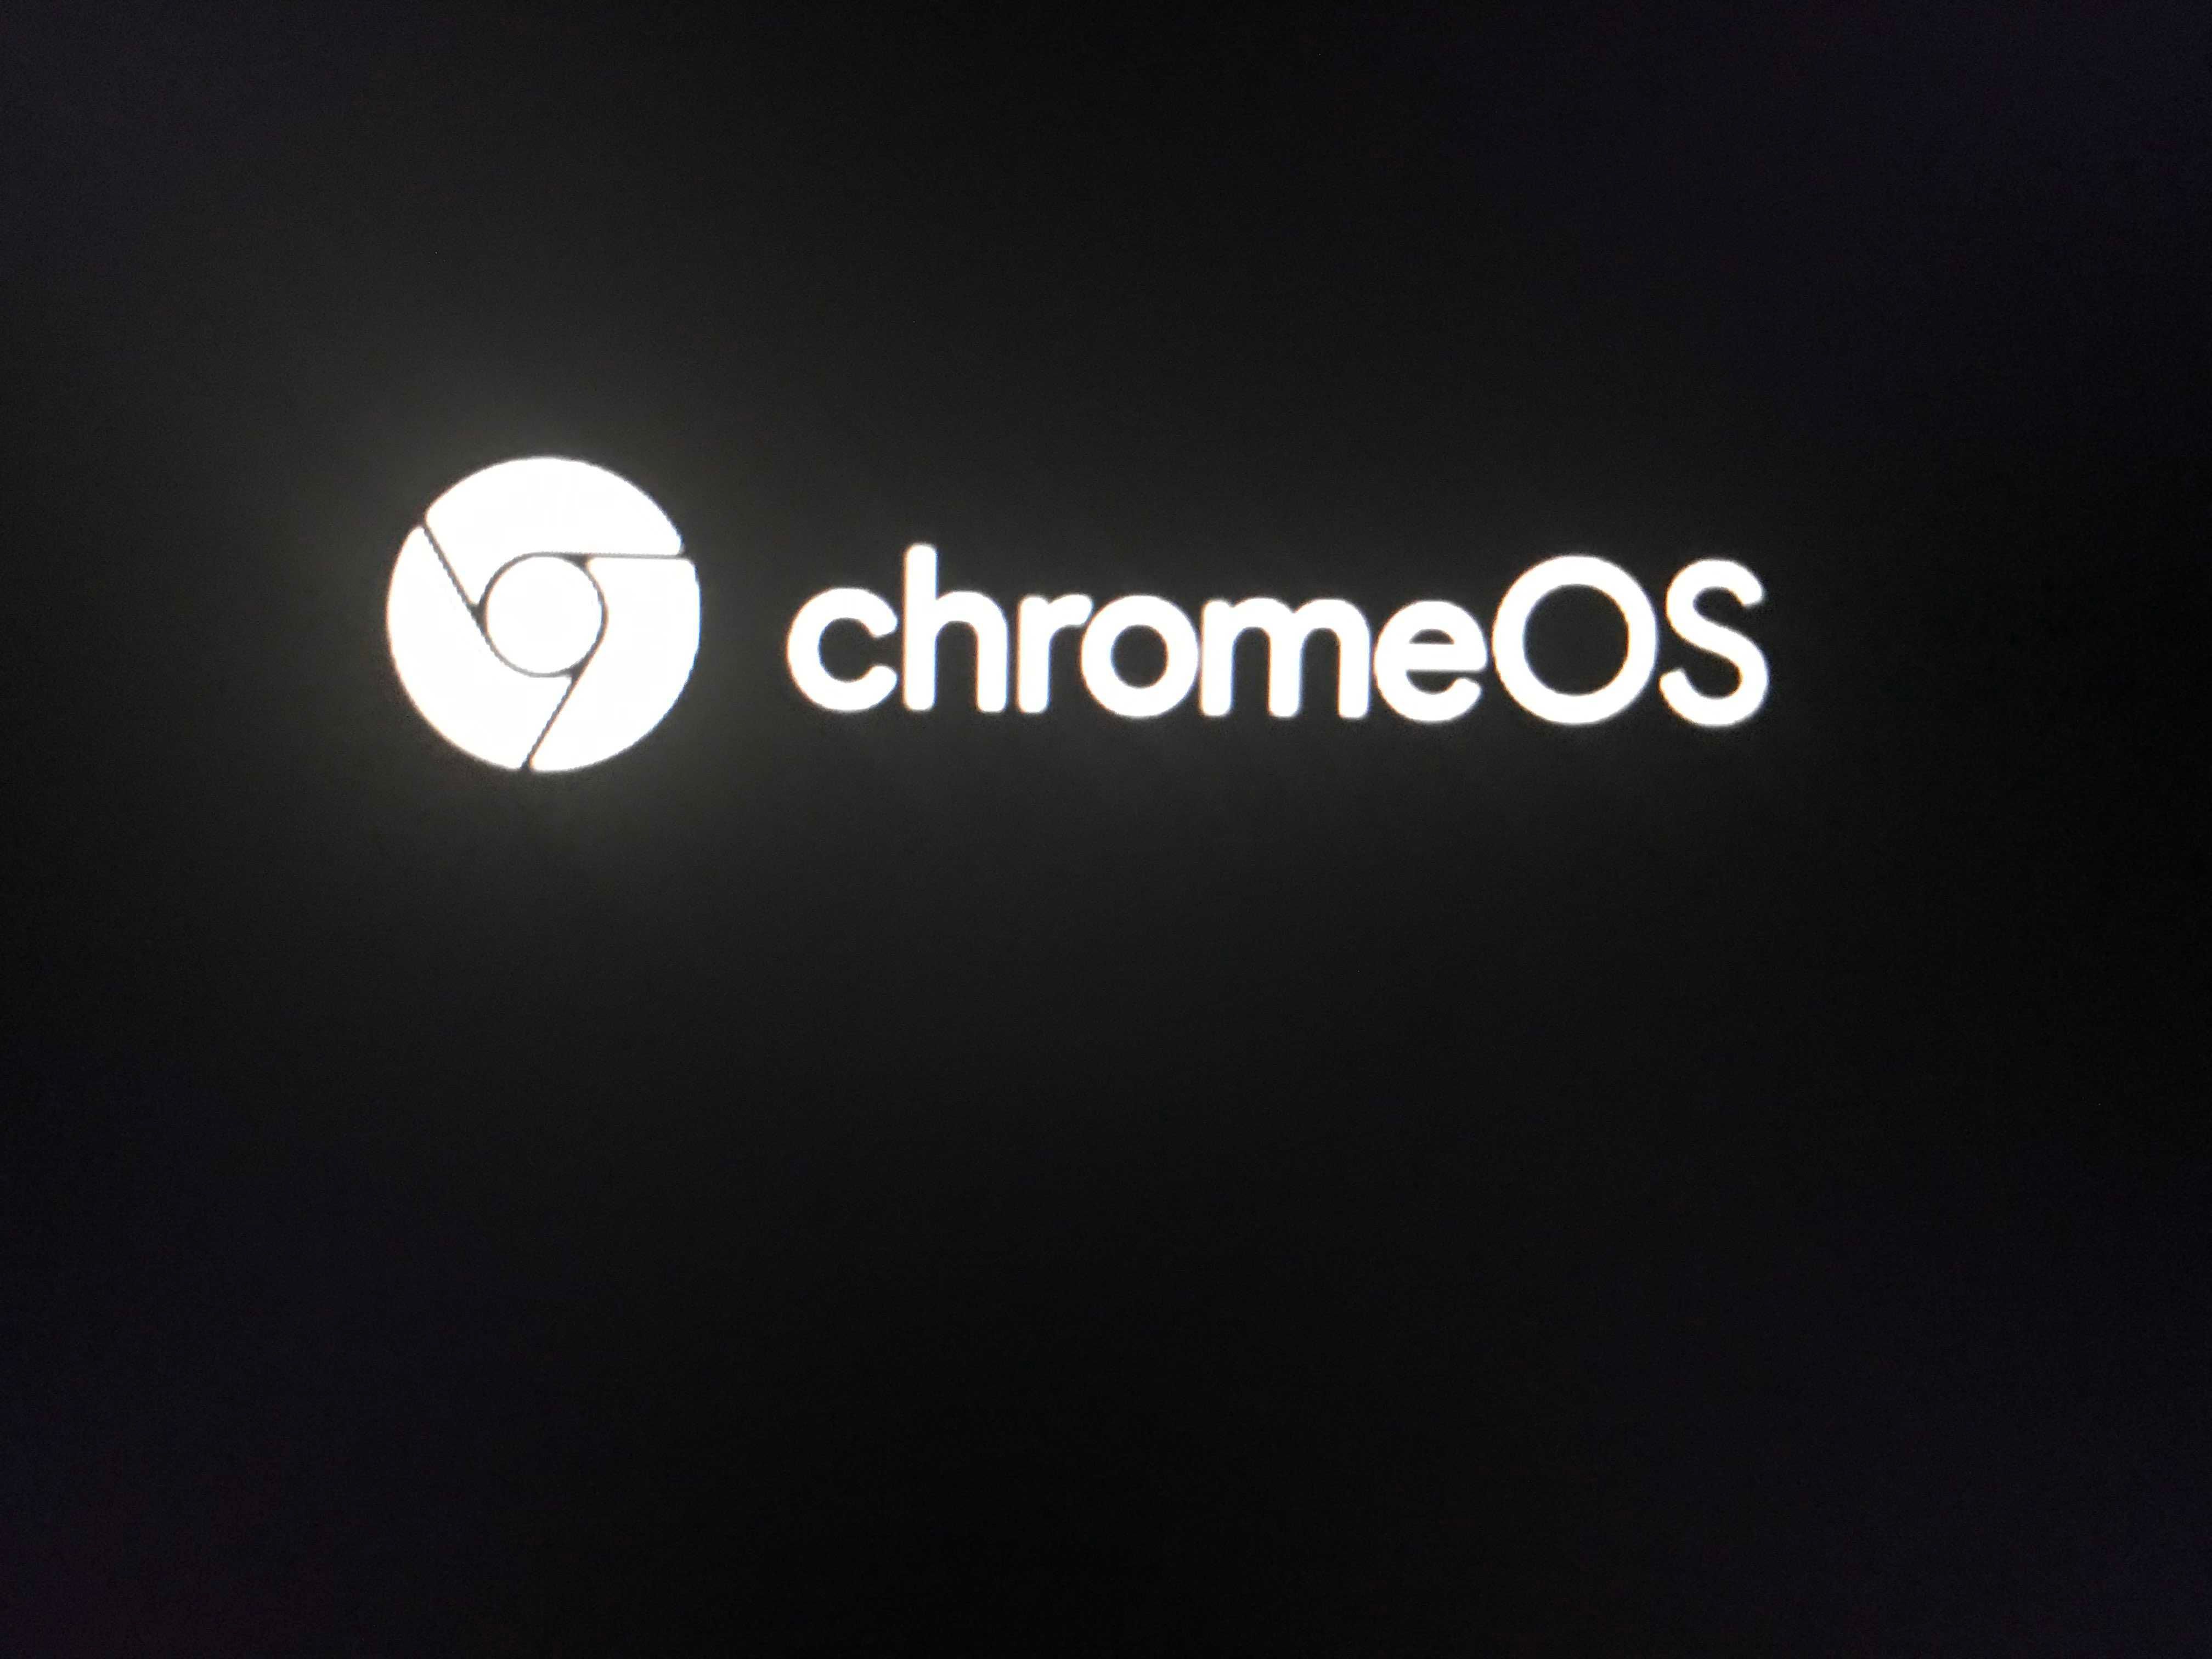 ChromeOS dark boot theme